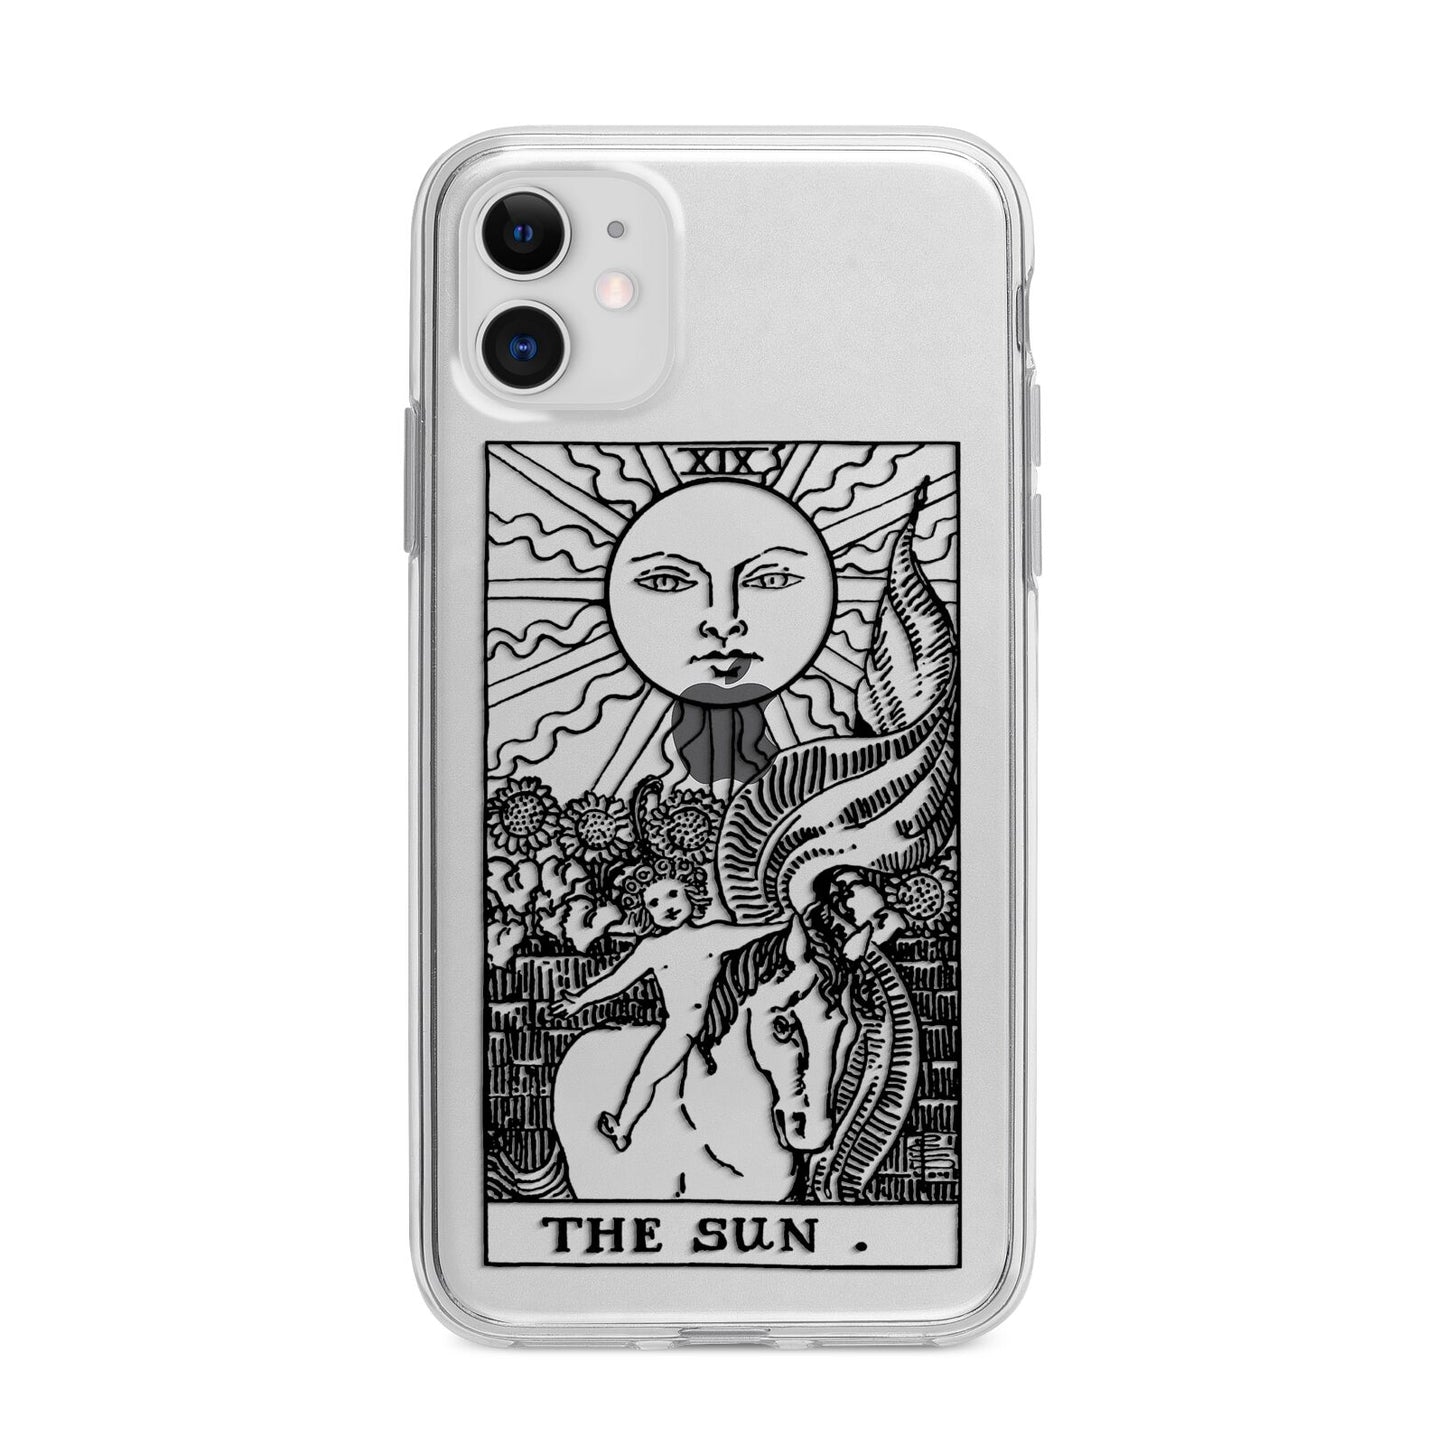 The Sun Monochrome Apple iPhone 11 in White with Bumper Case